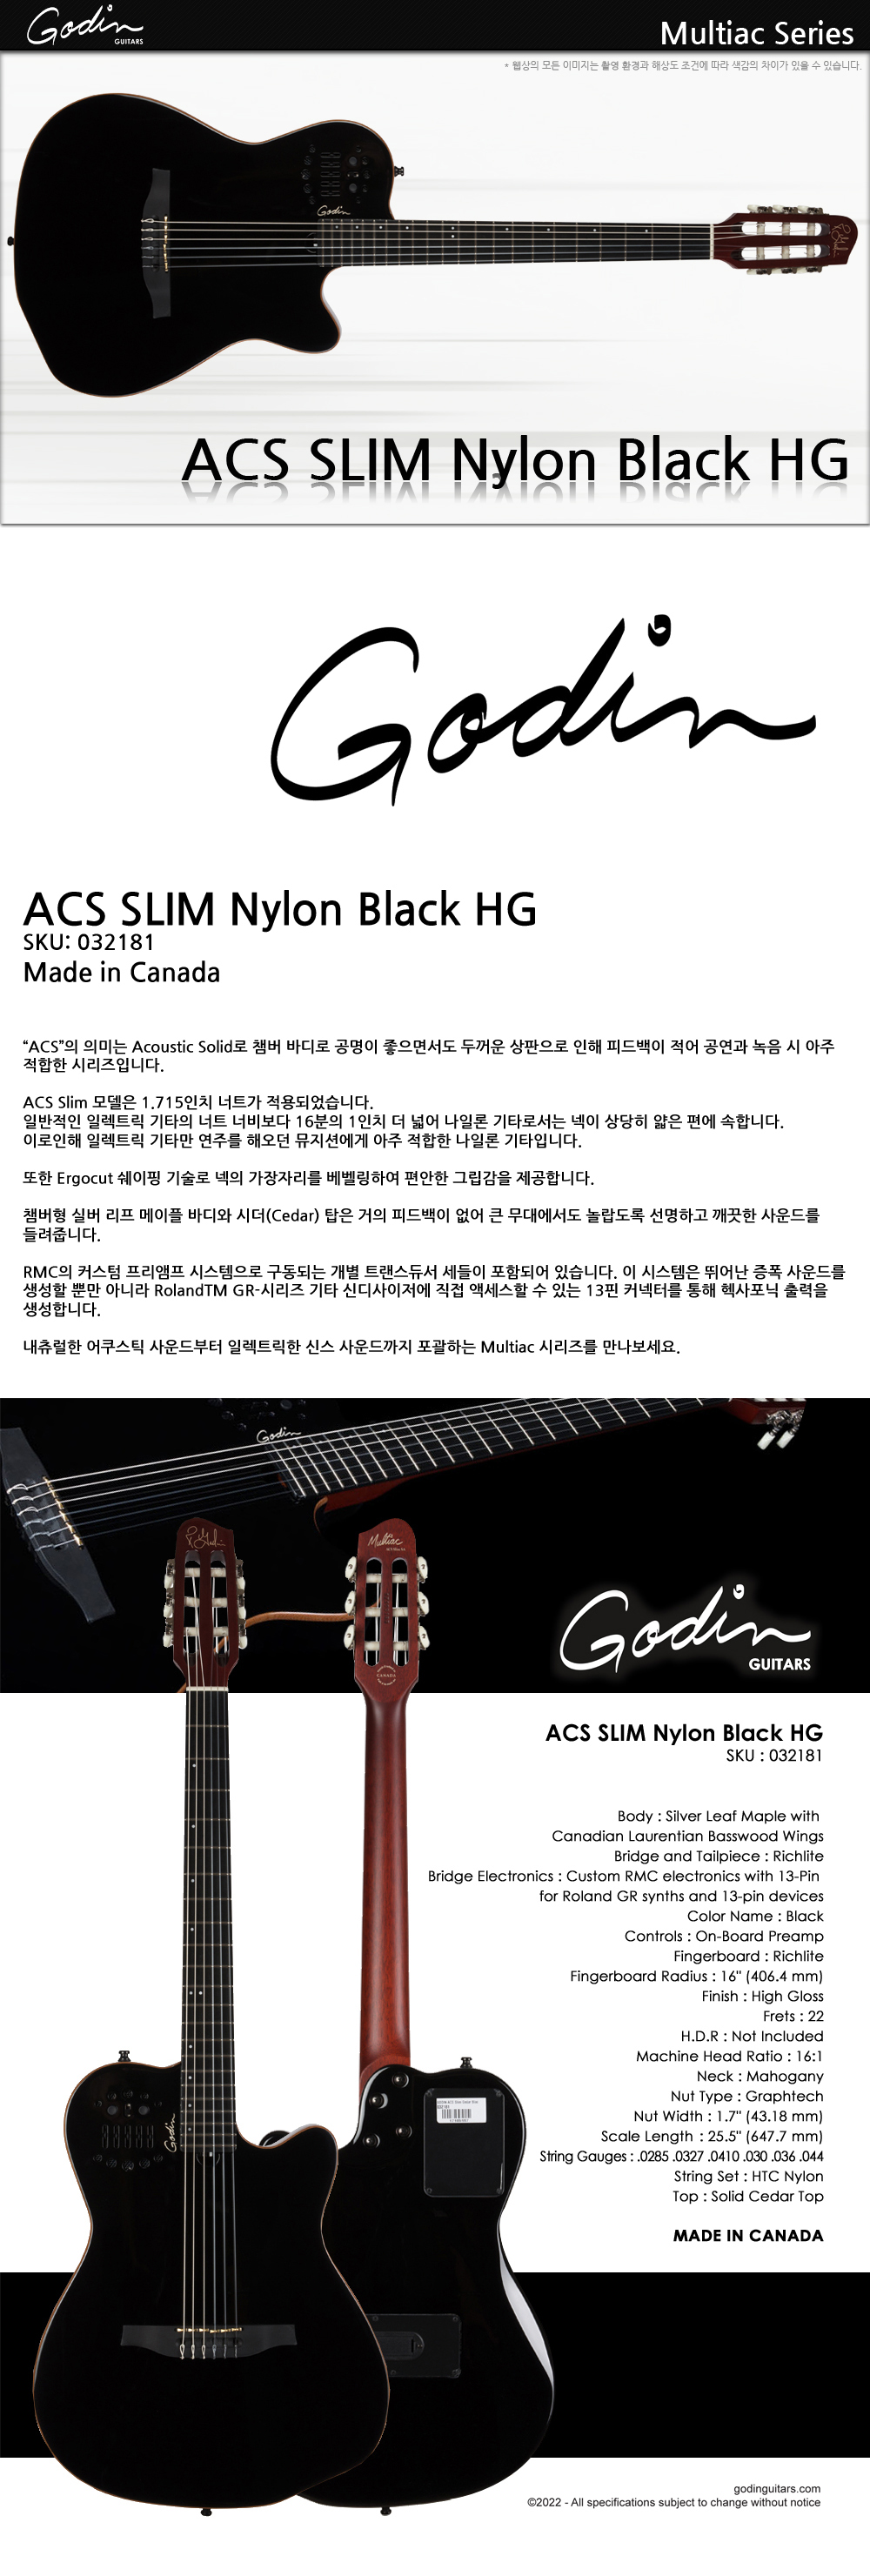 Godin-032181-ACS-SLIM-Nylon-Black-HG_1_114844.jpg